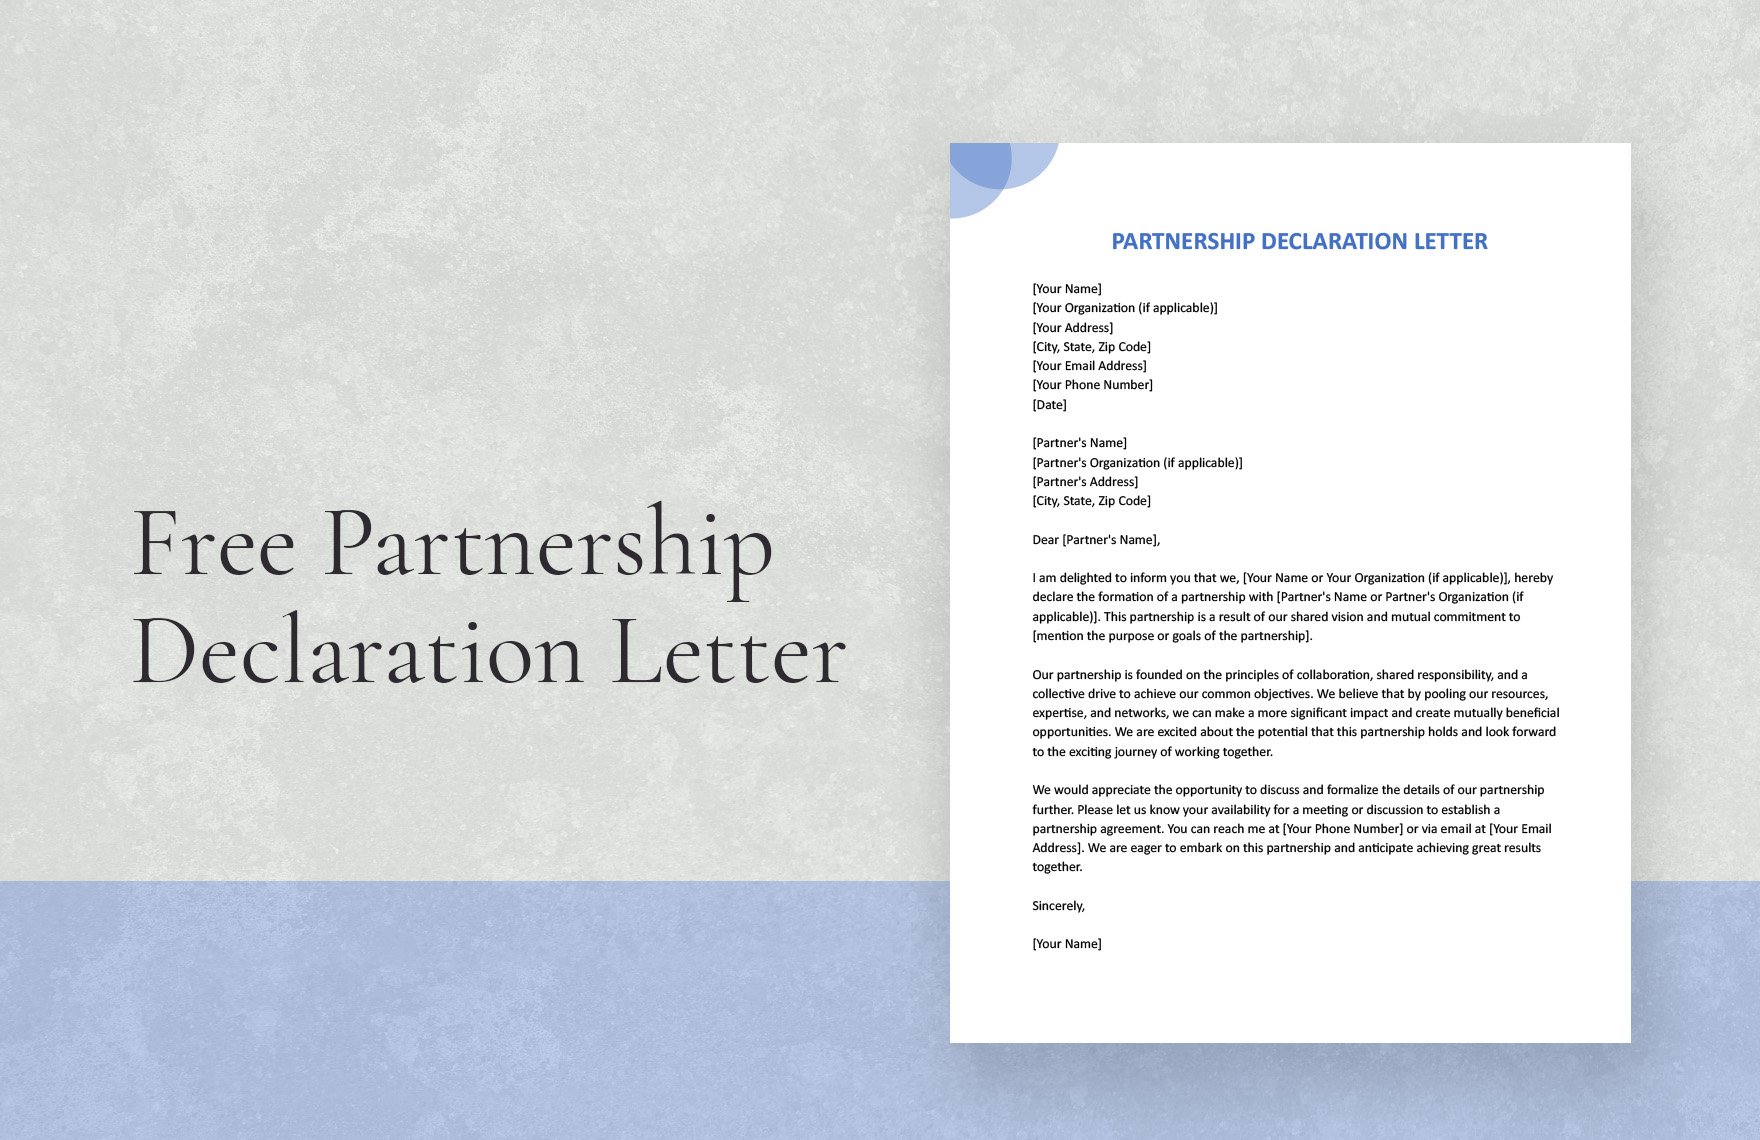 Free Partnership Declaration Letter in Word, Google Docs